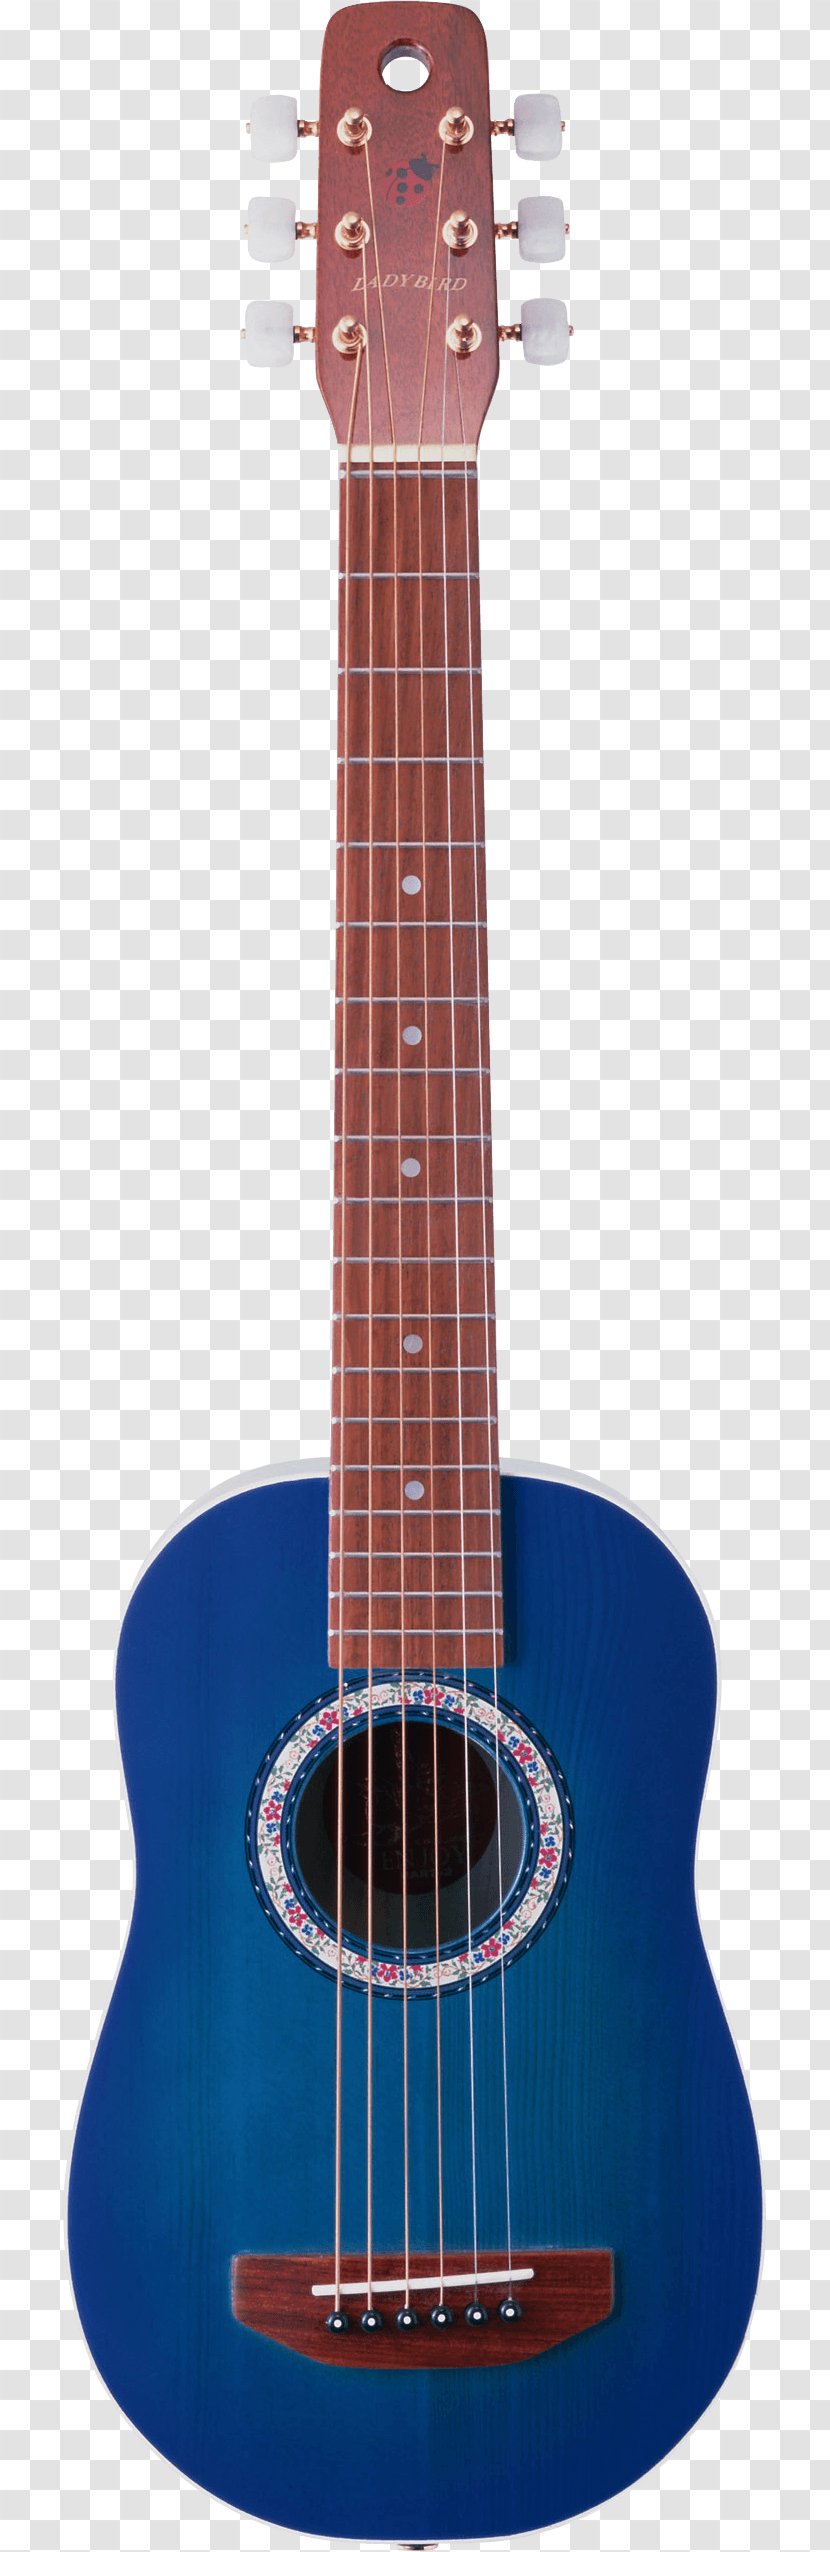 Electric Guitar Gibson Les Paul Musical Instrument Acoustic - Watercolor - Image Transparent PNG